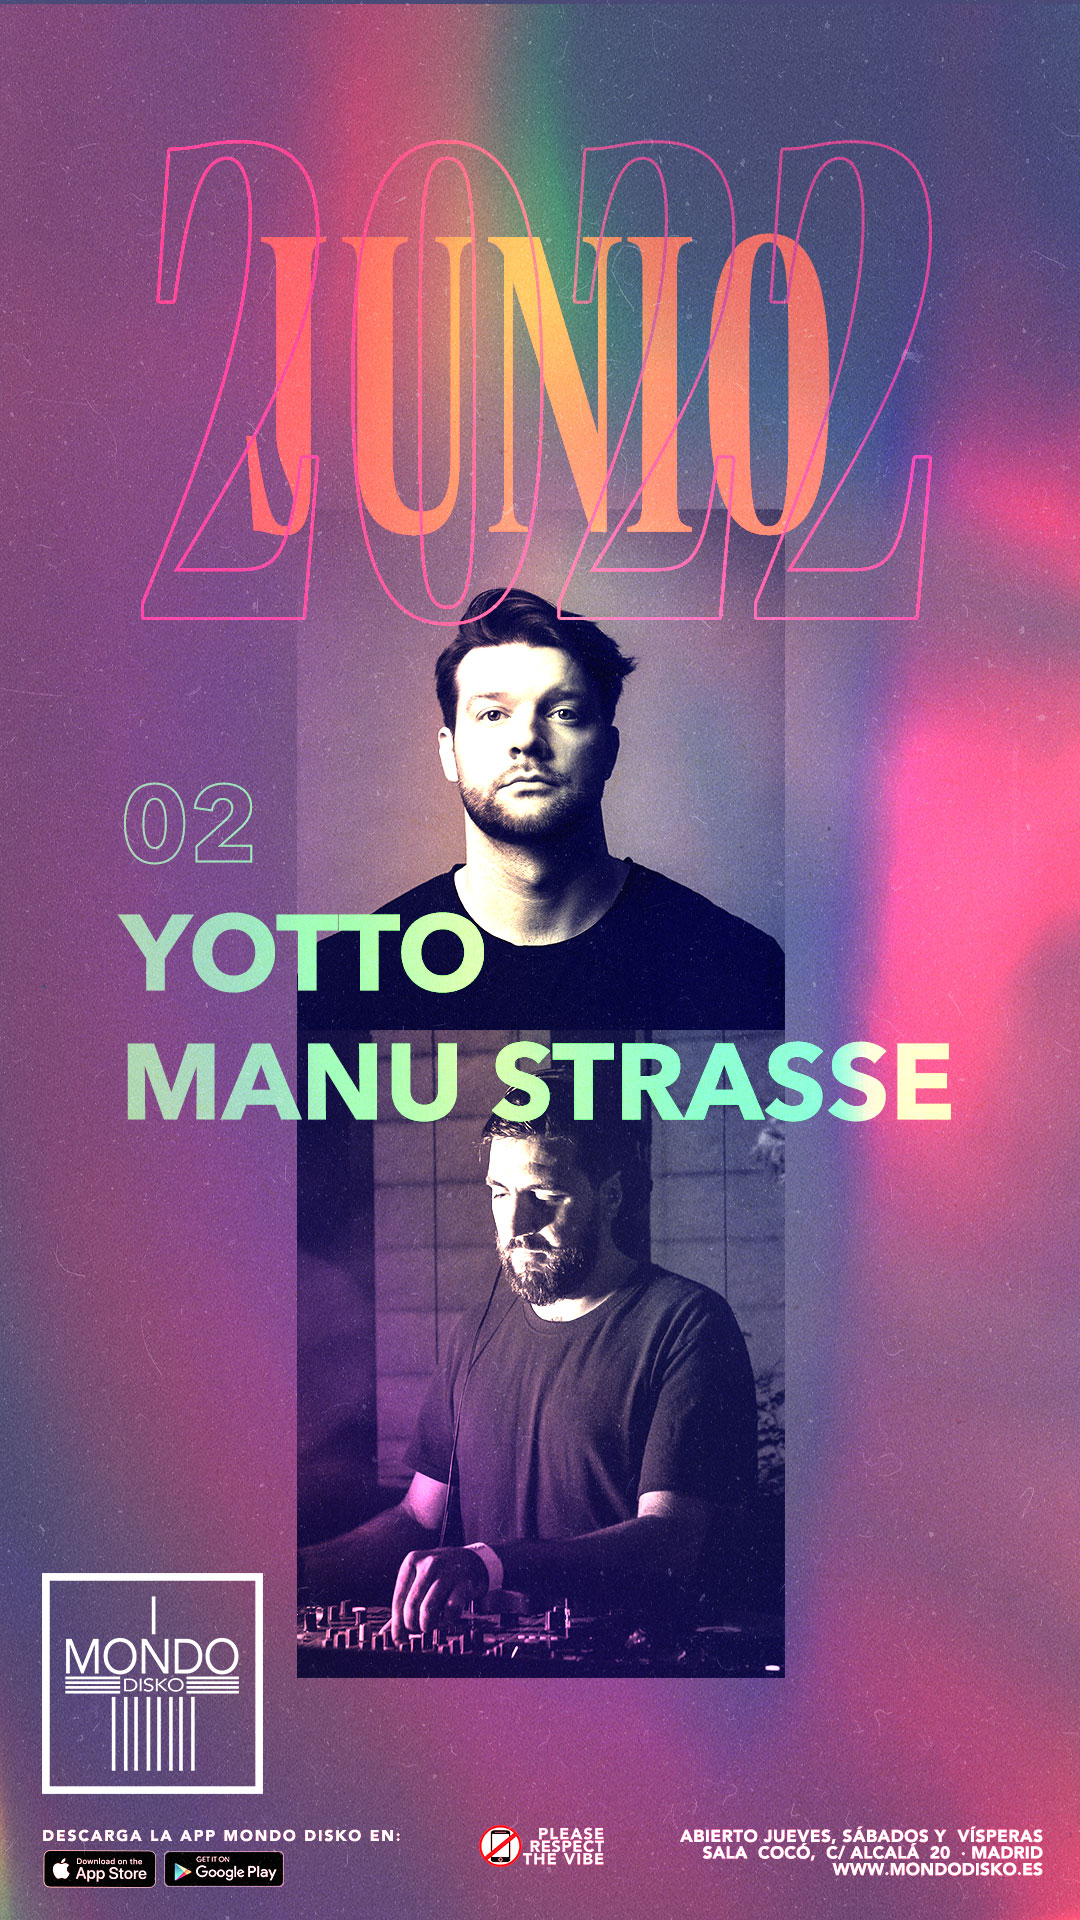 Yotto / Manu Strasse - Flyer front